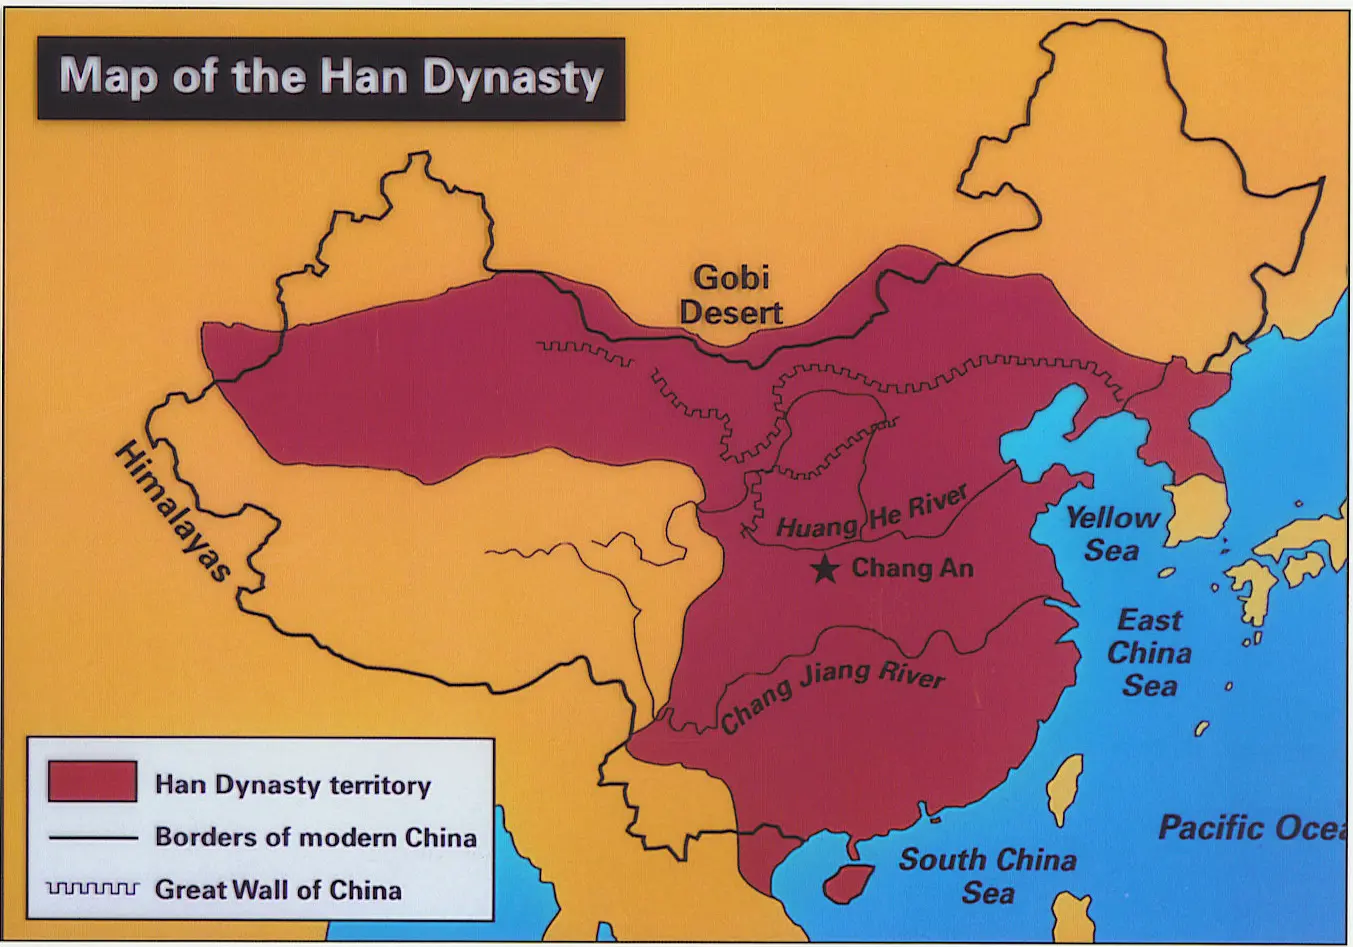 The Han Dynasty [206 BC – 220 AD]